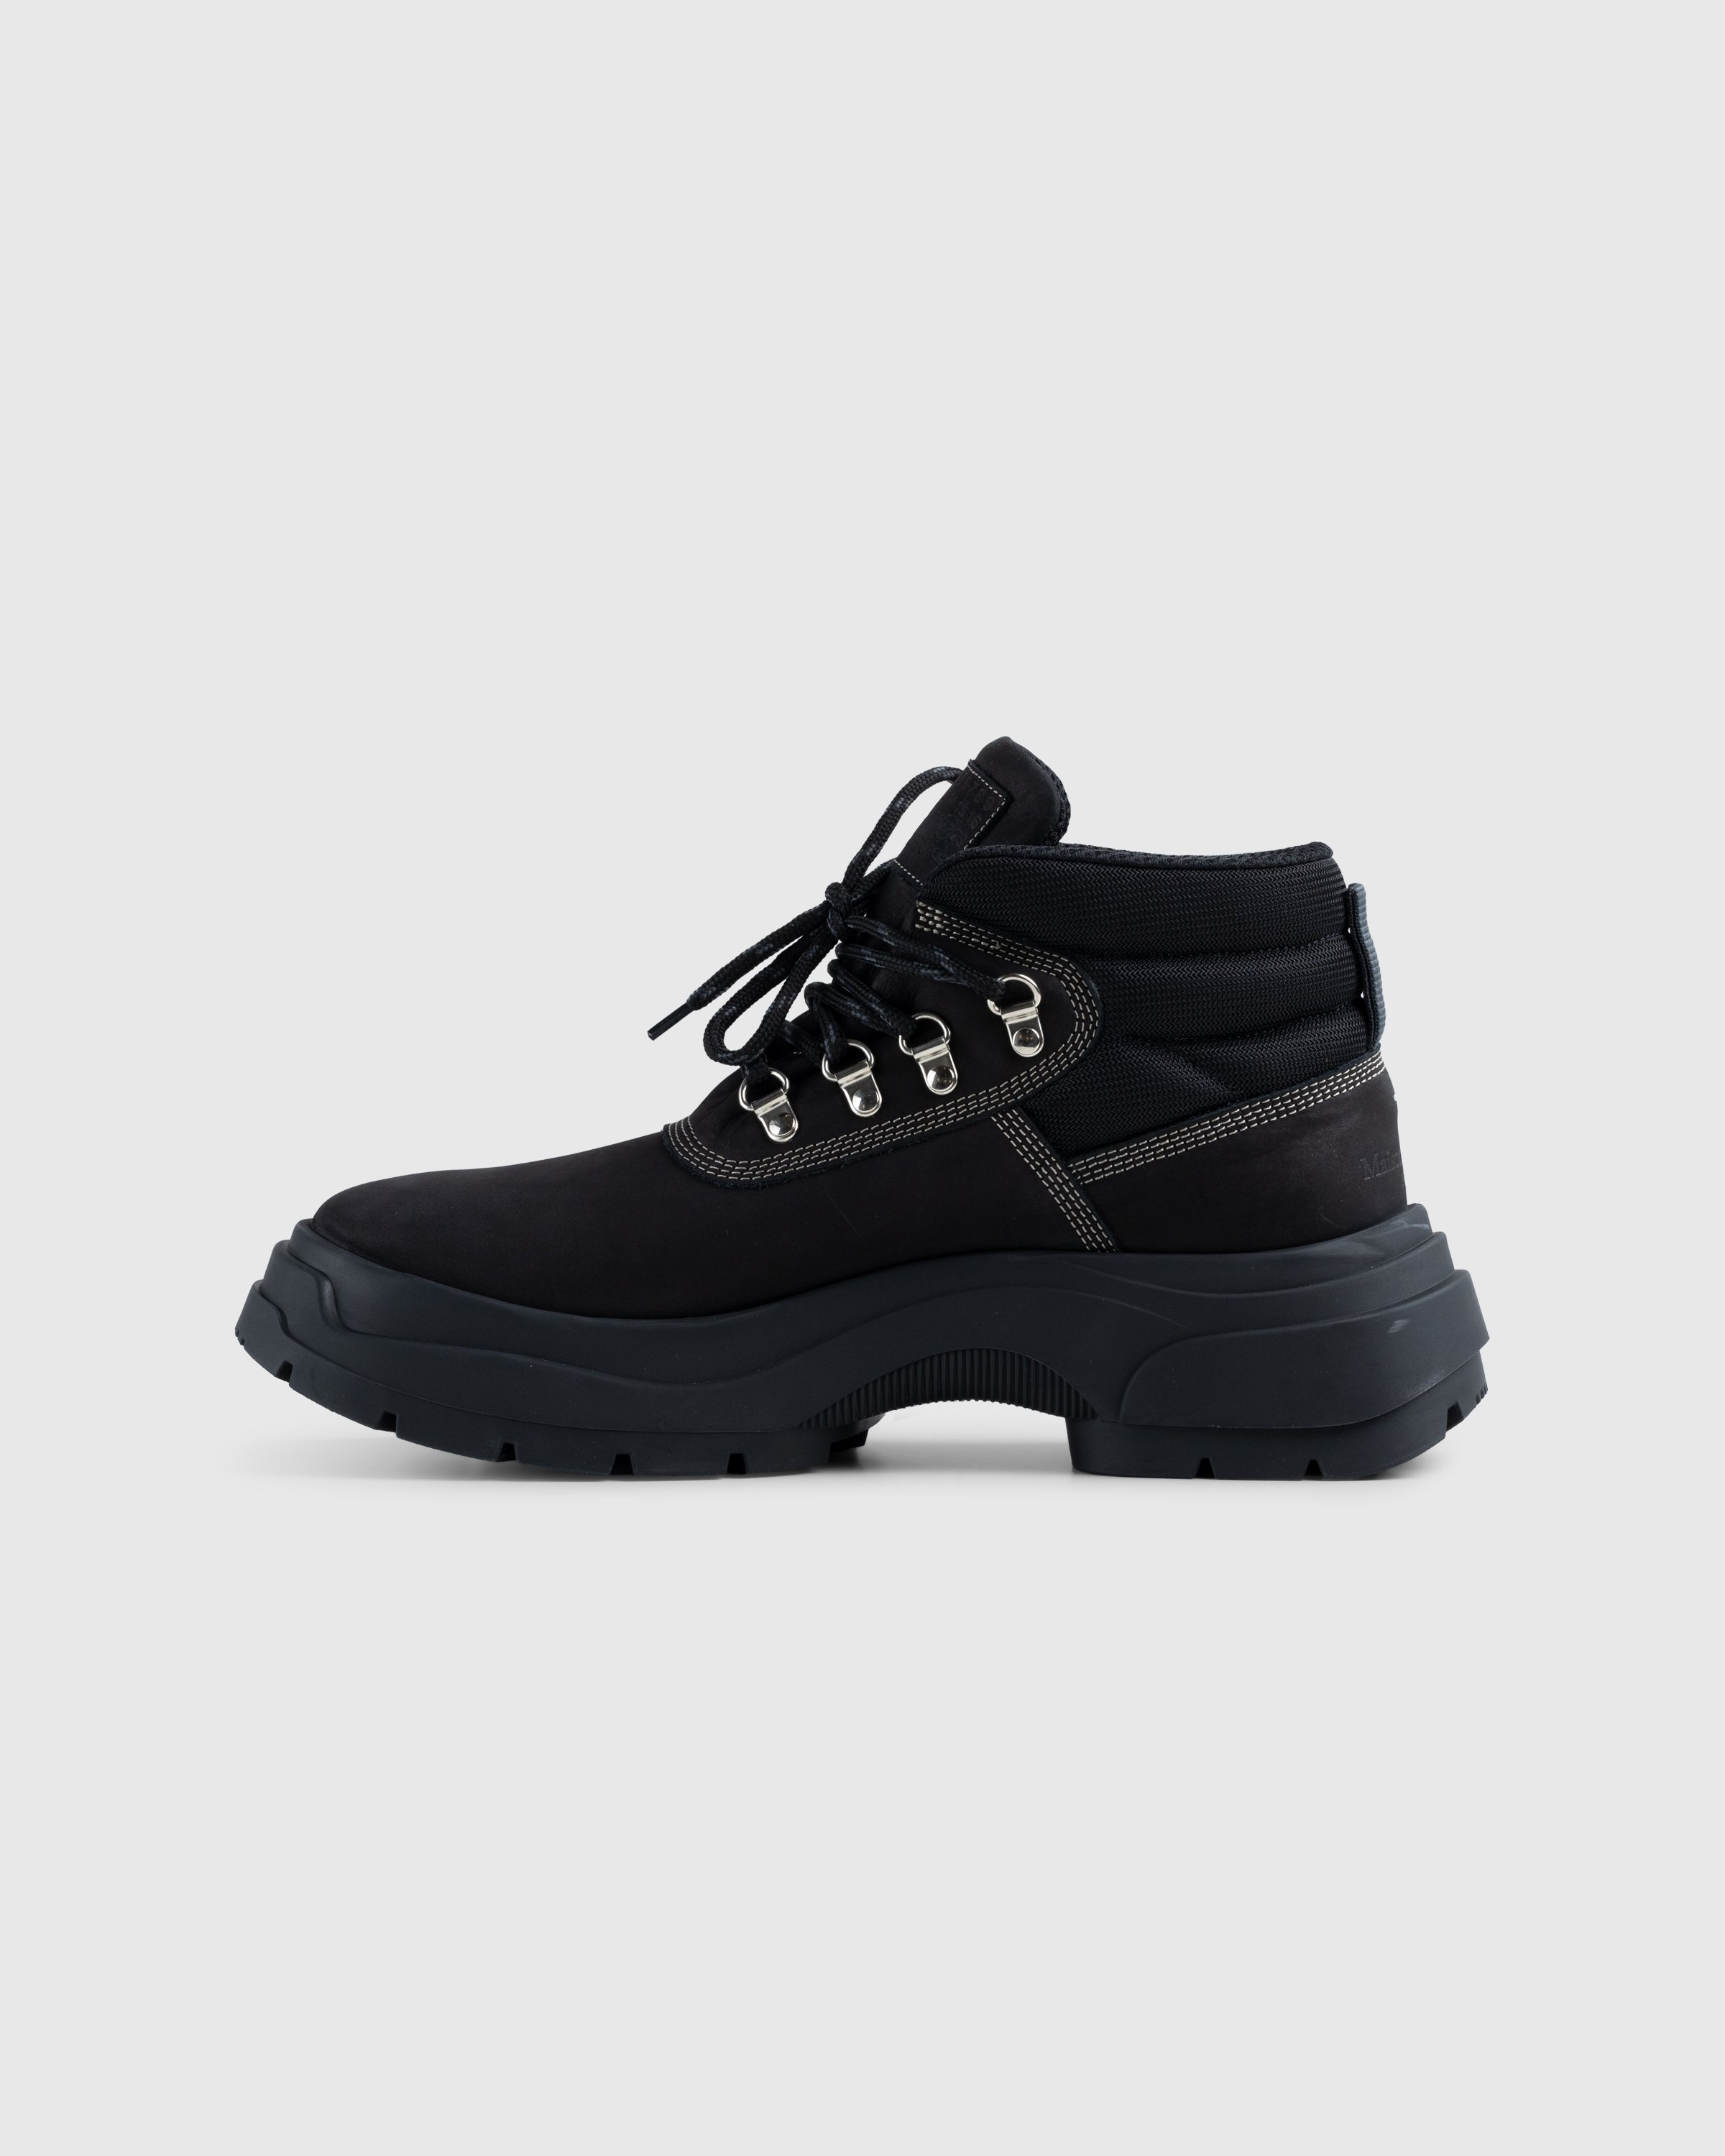 Maison Margiela – Alex Hiking Boot Black/Black - Sneakers - Black - Image 2